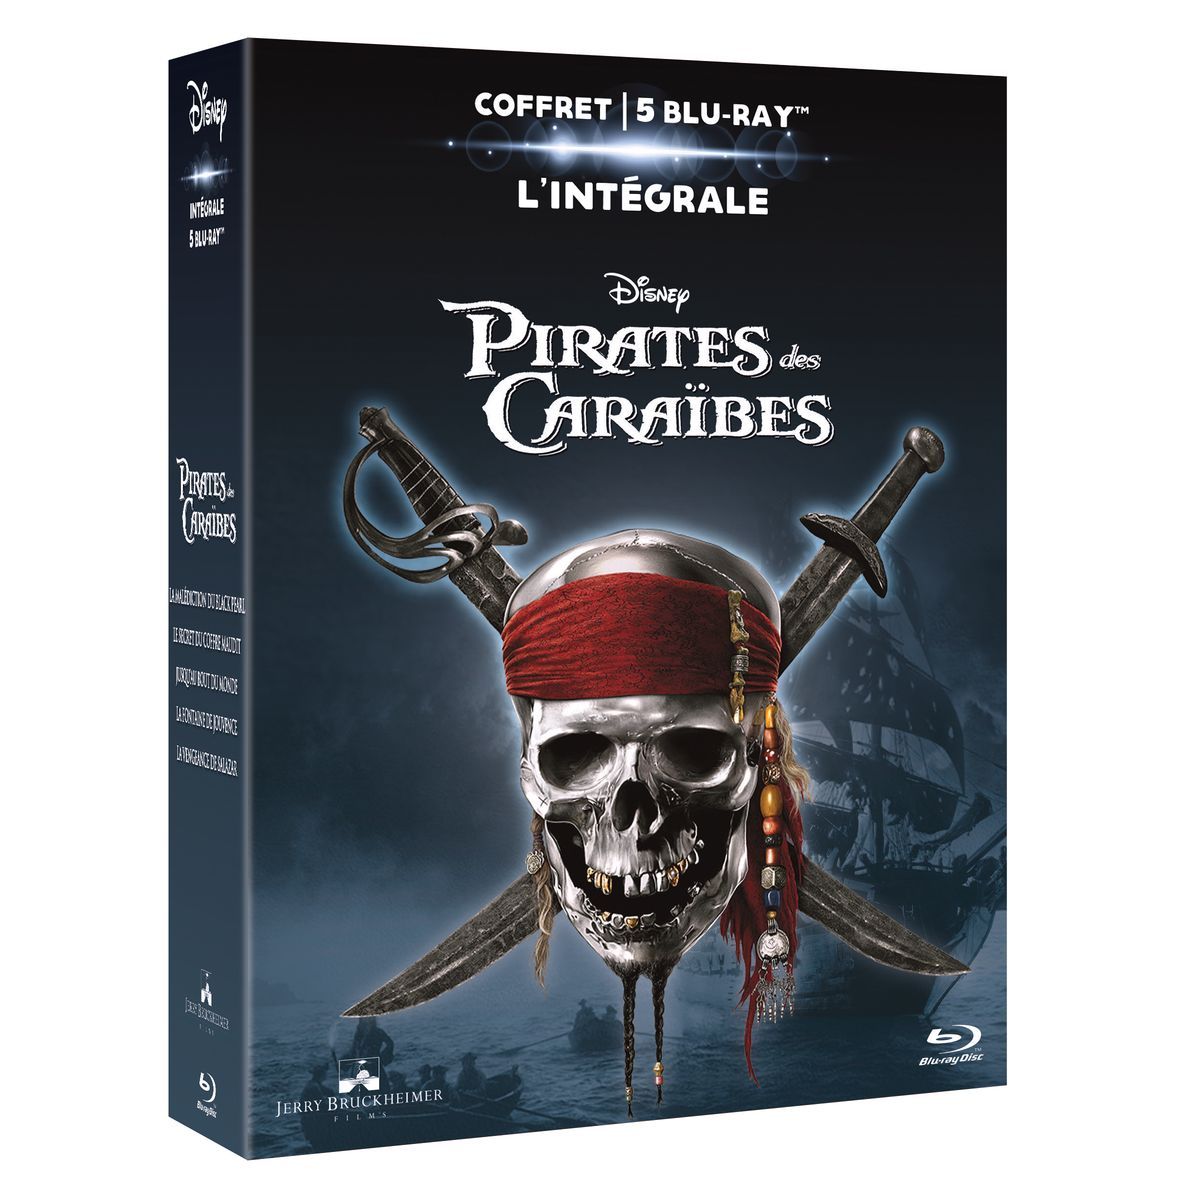 DISNEY Coffret Pirates des Caraïbes L'intégrale Blu-Ray pas cher 